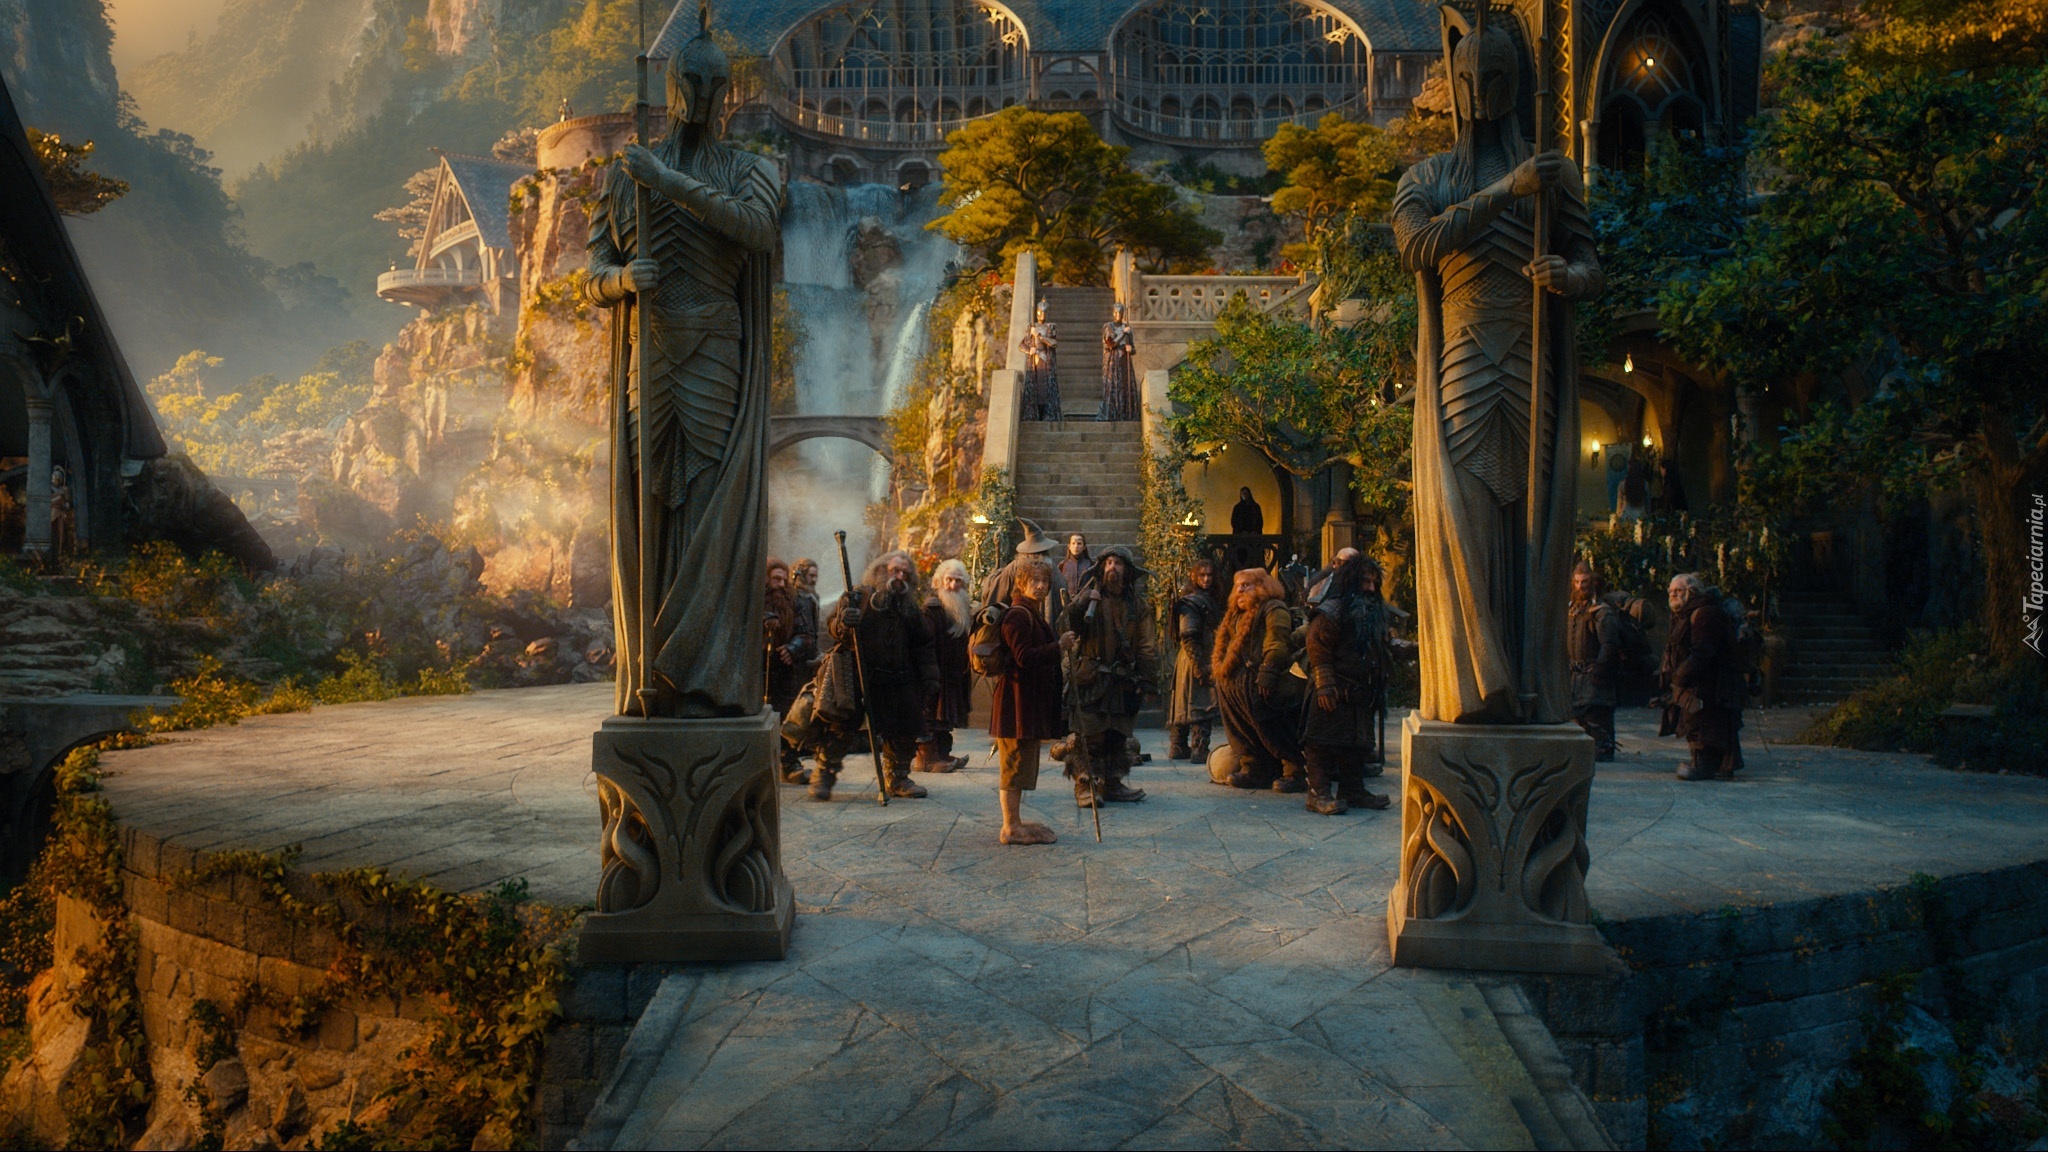 Hobbit, Pałac, Postacie